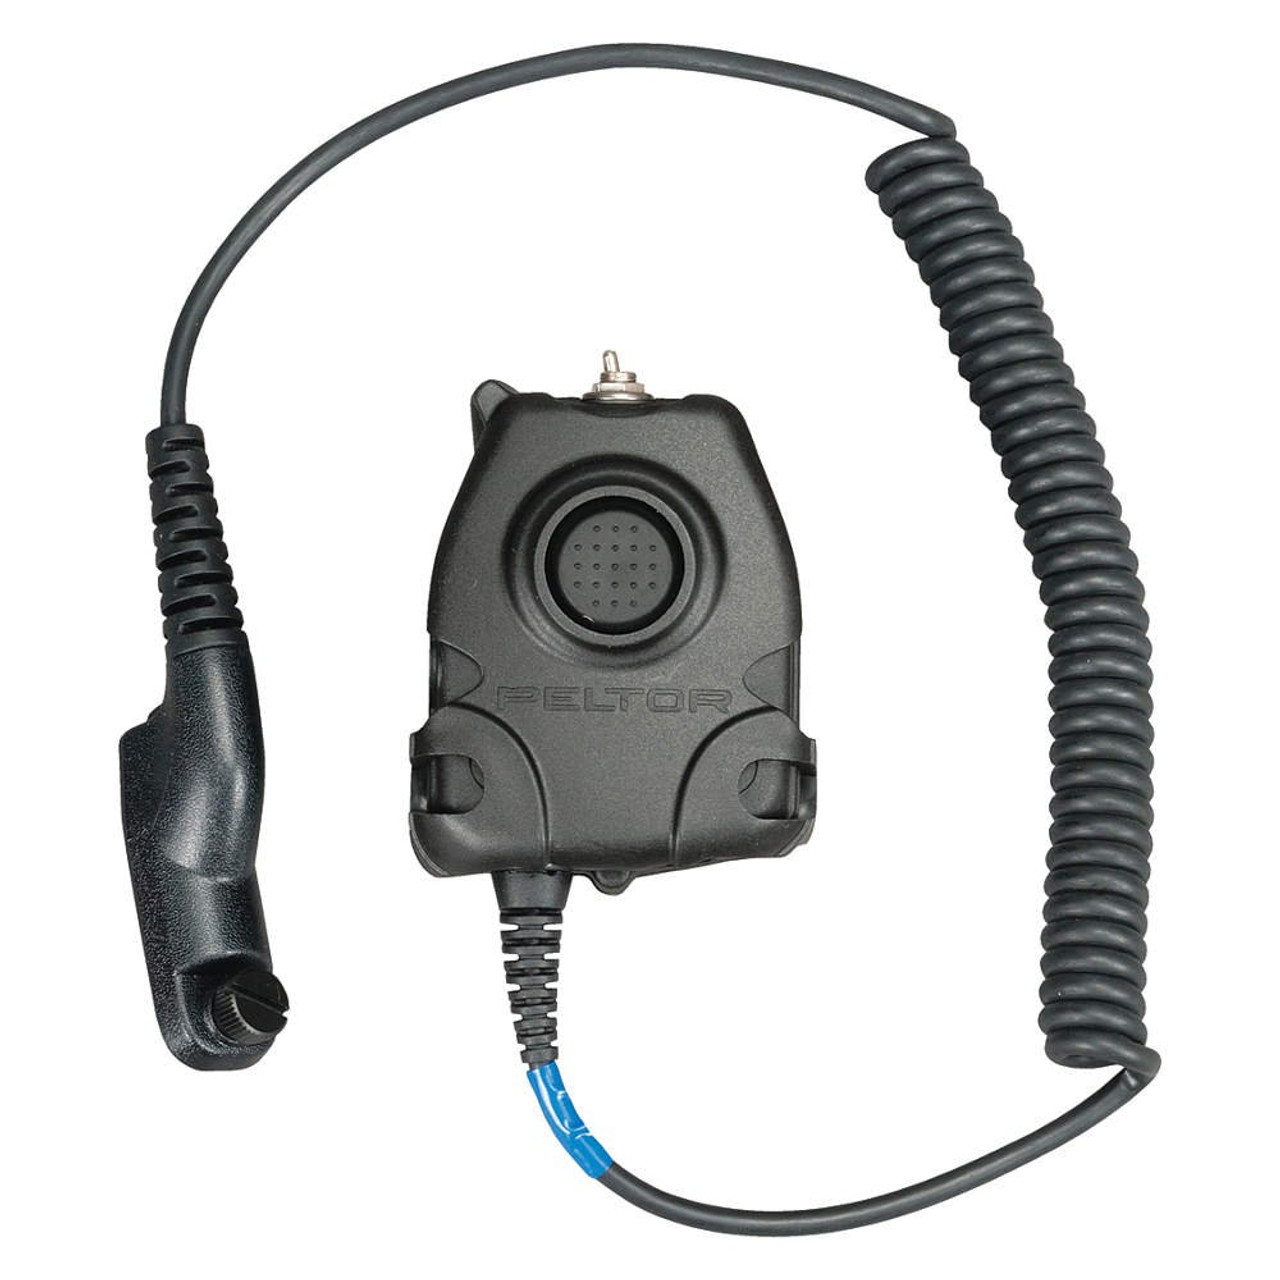 3M FL5063-02 PELTOR Push-To-Talk (PTT) Adapter Motorola Turbo NATO Wiring  Industrial Safety Products